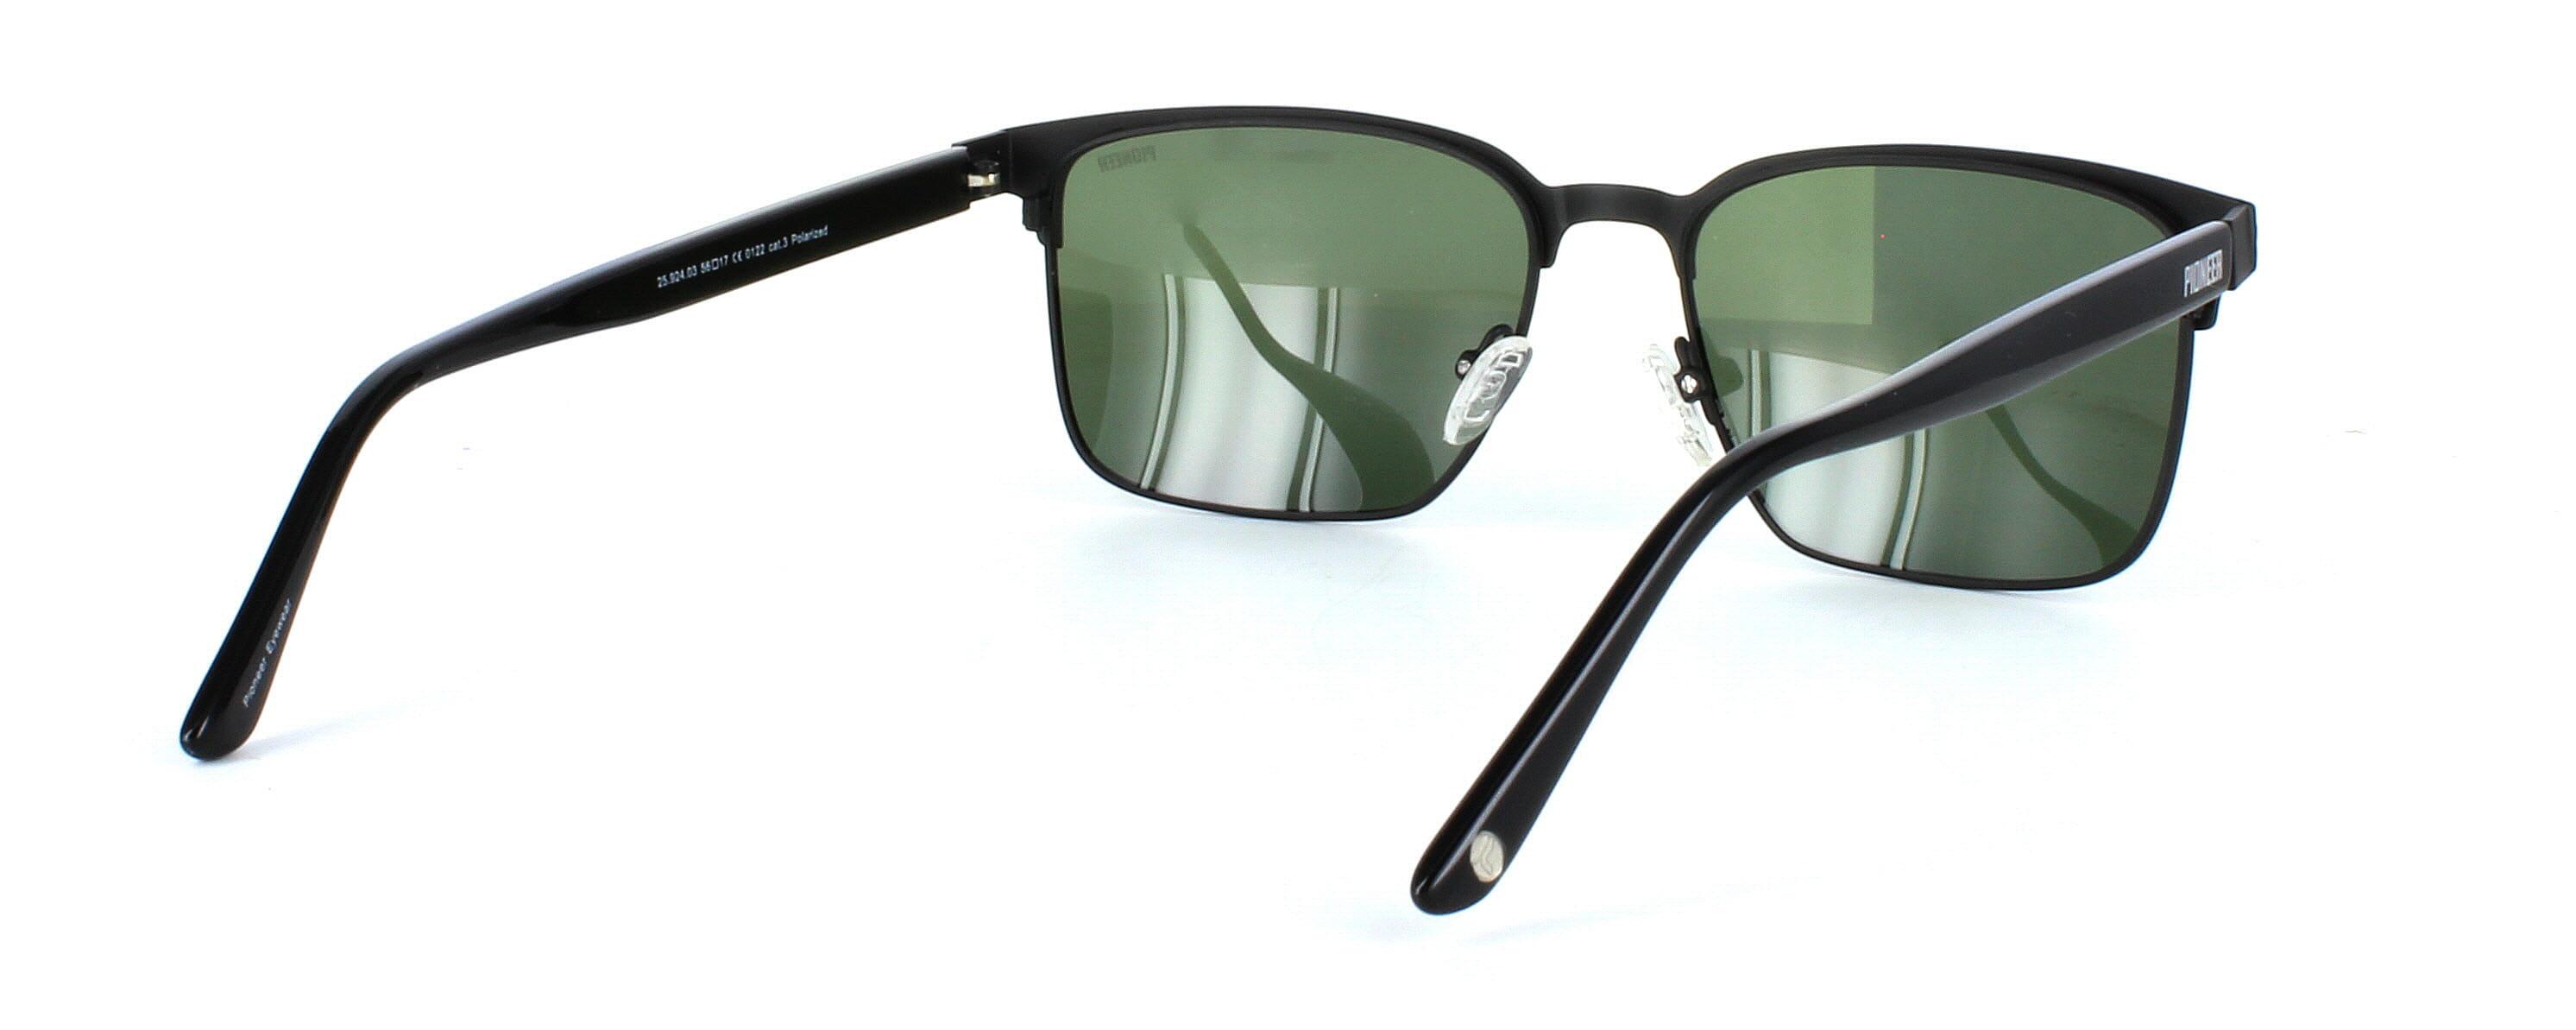 Sorrento - Unisex metal prescription sunglasses - Blue - Image view 5